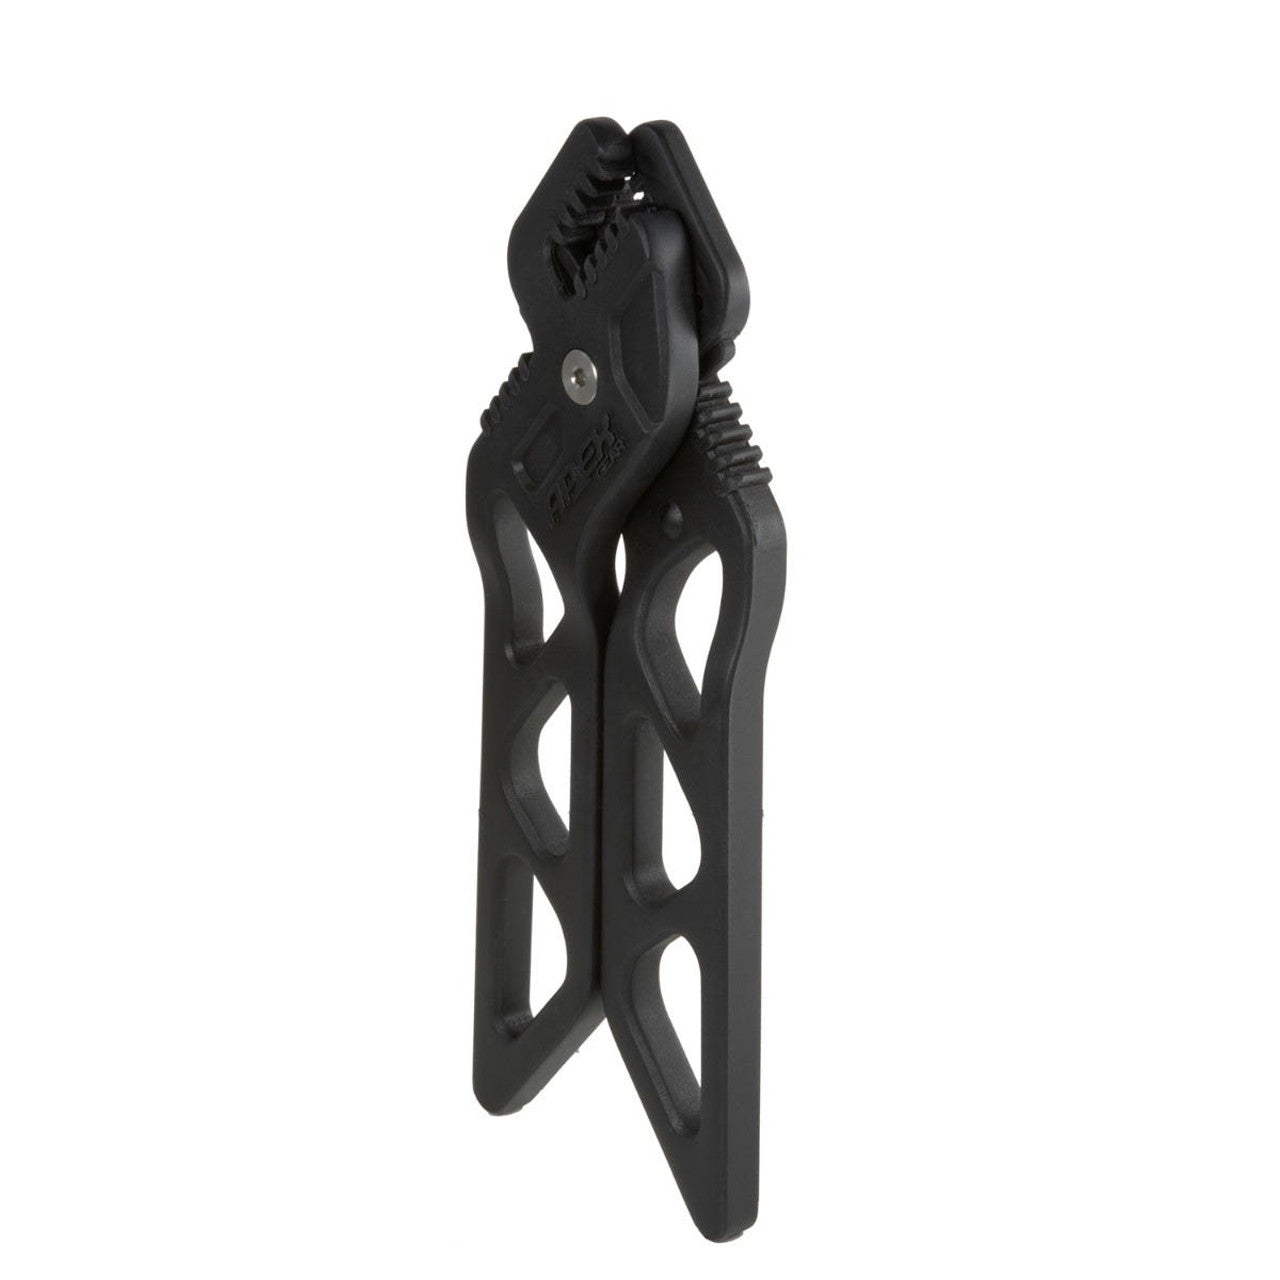 Apex Gear Split-Grip Bow Stand